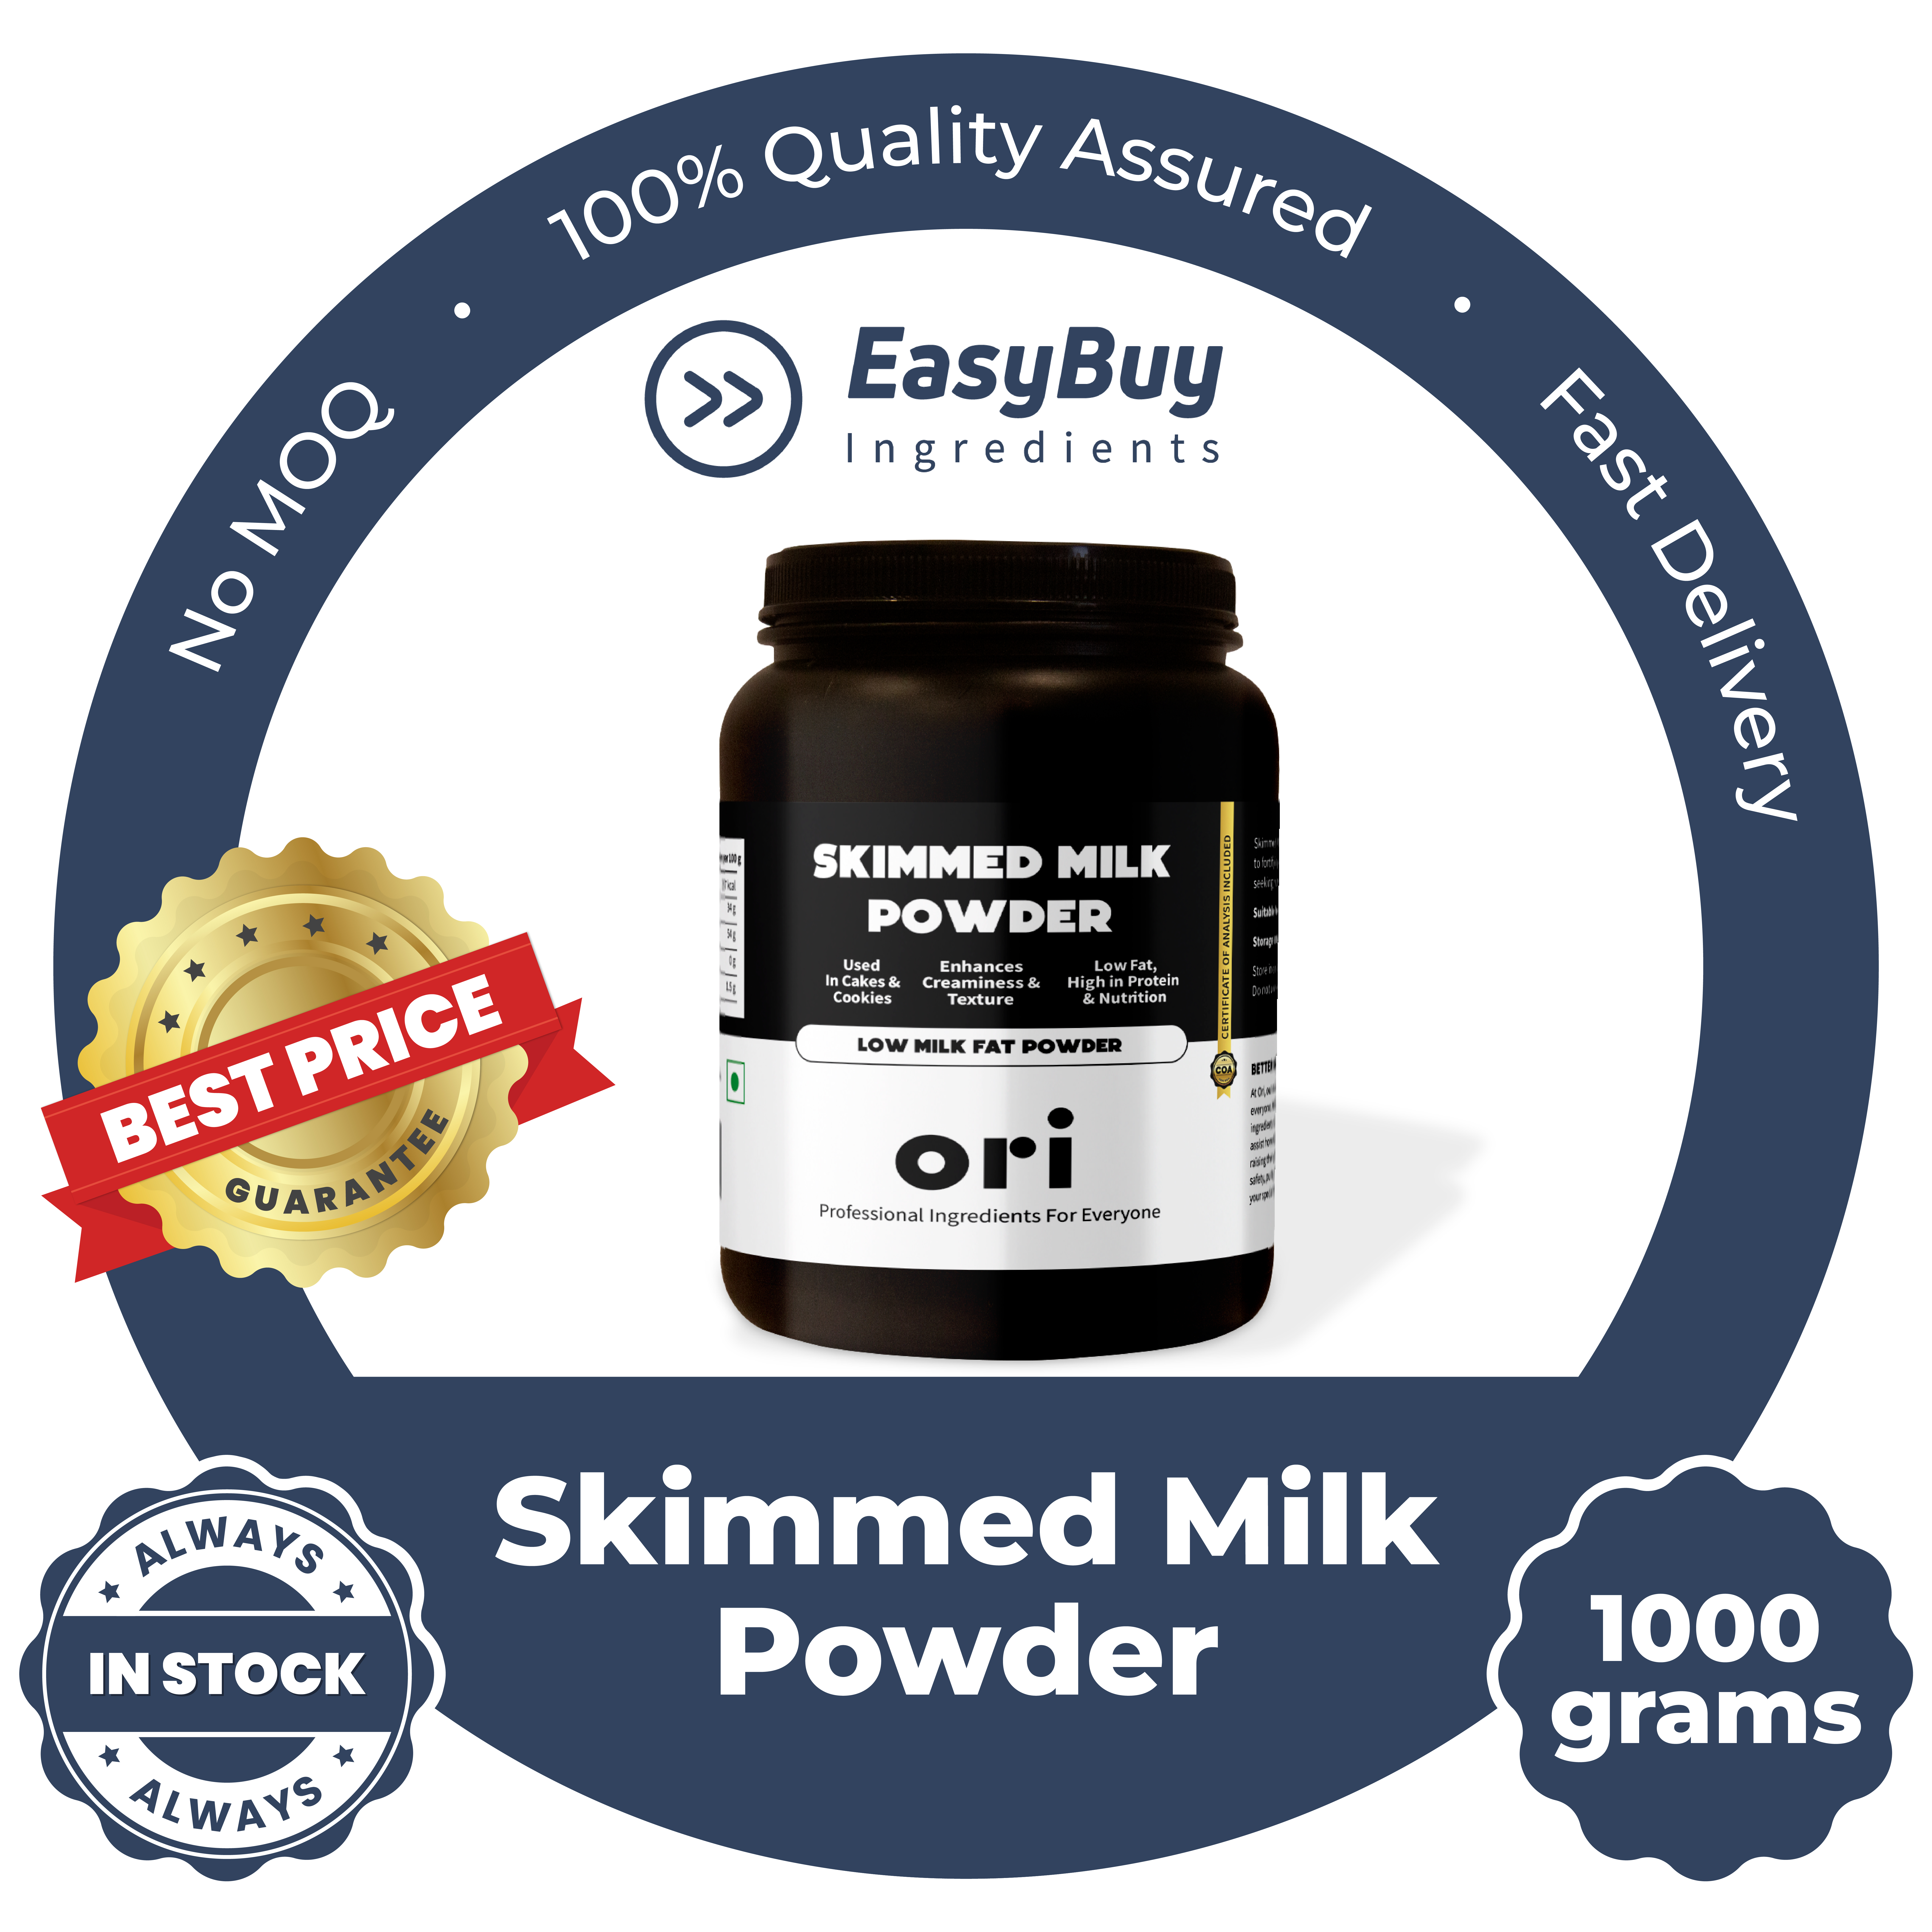 Skimmed Milk Powder - Low Milk Fat Powder